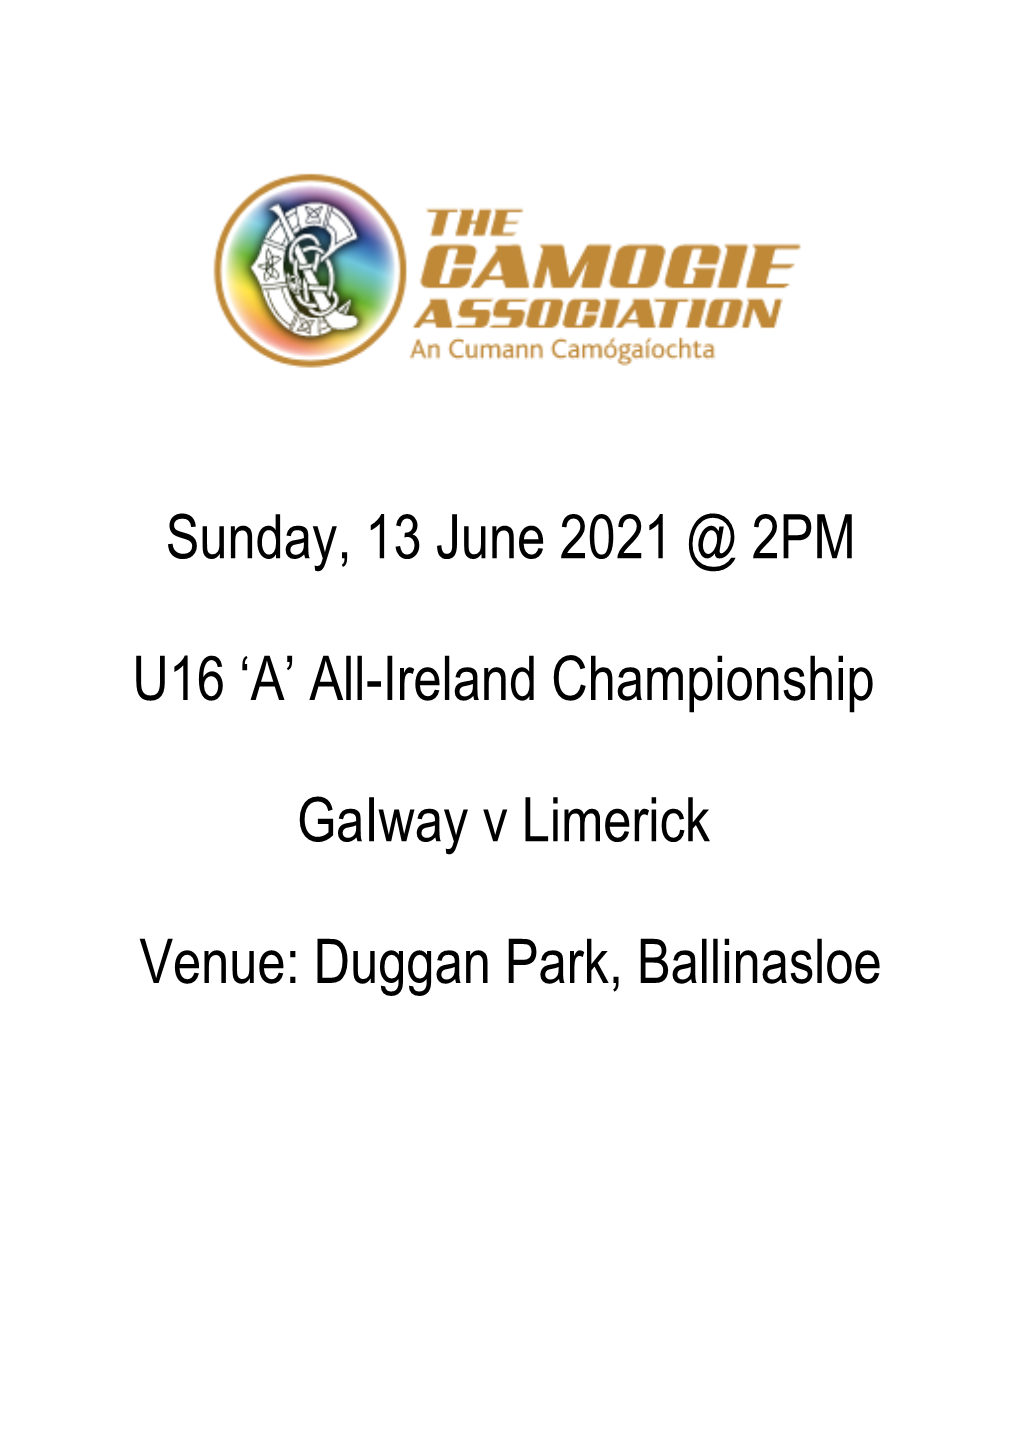 Sunday, 13 June 2021 @ 2PM U16 'A' All-Ireland Championship